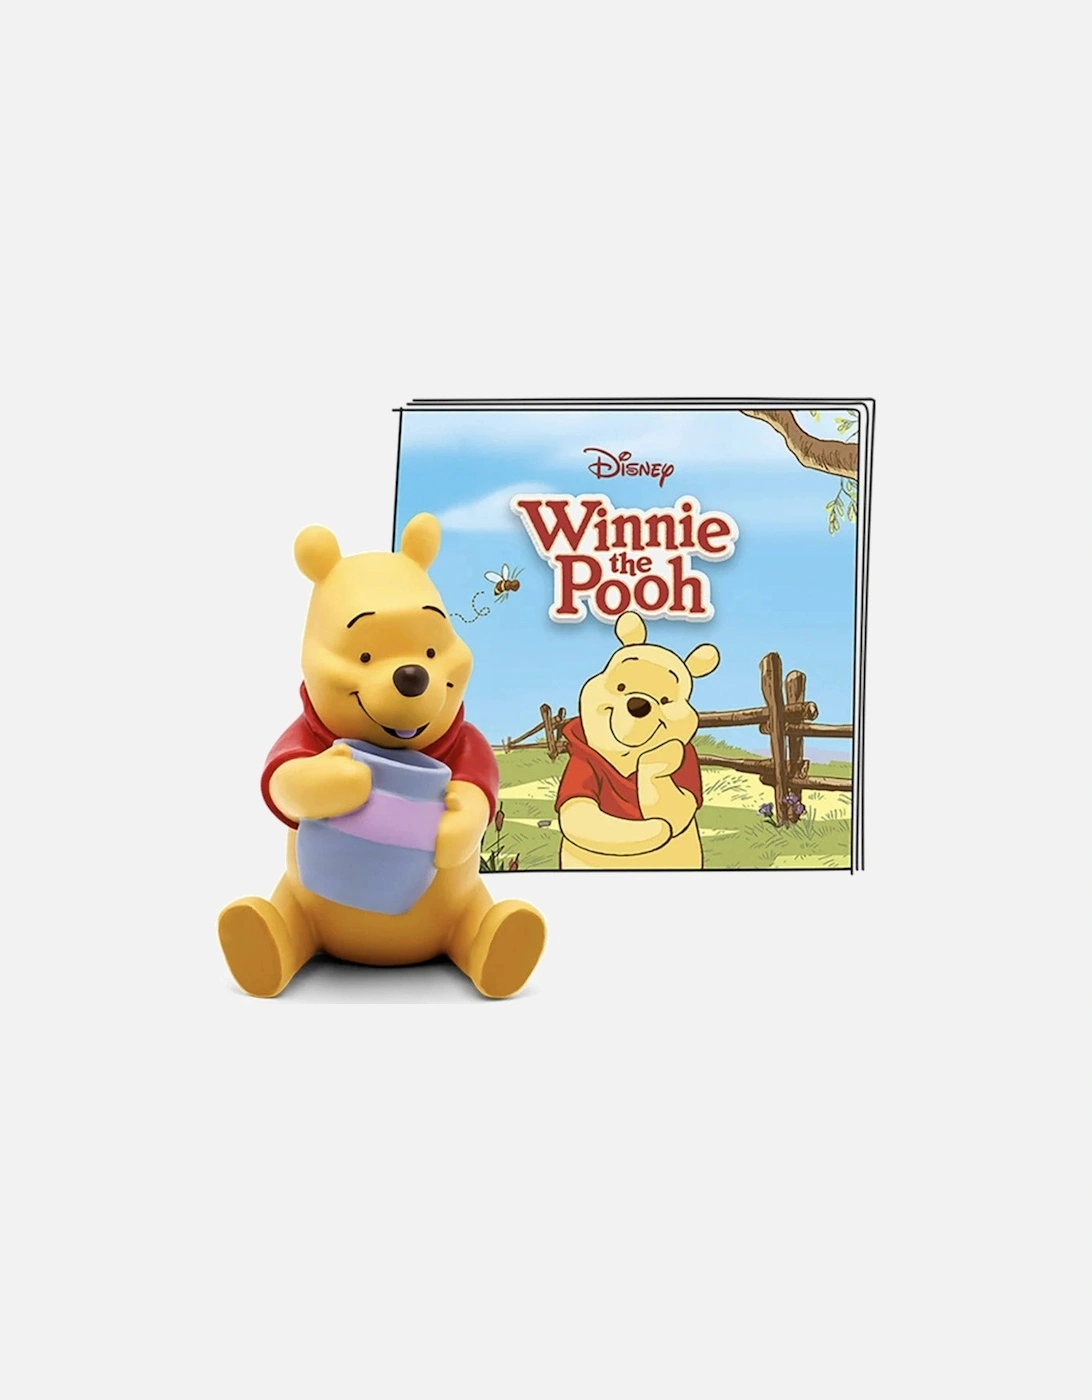 Disney - Winnie the Pooh [UK]